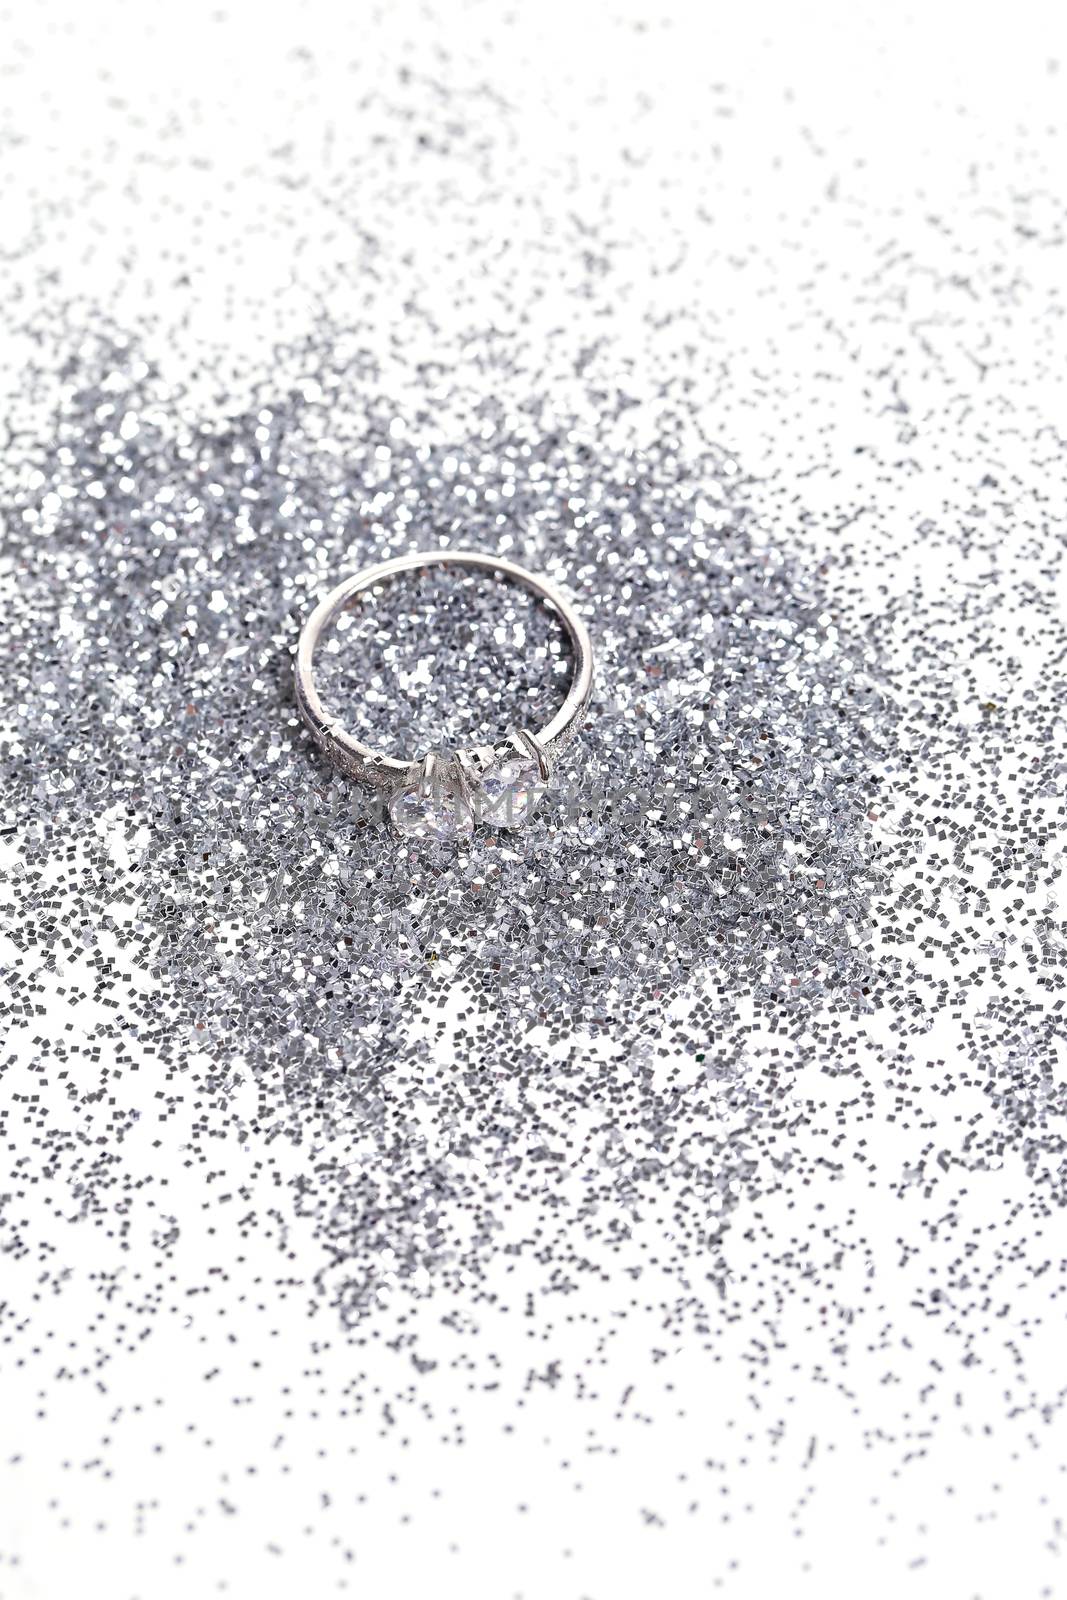 Diamond ring by rufatjumali